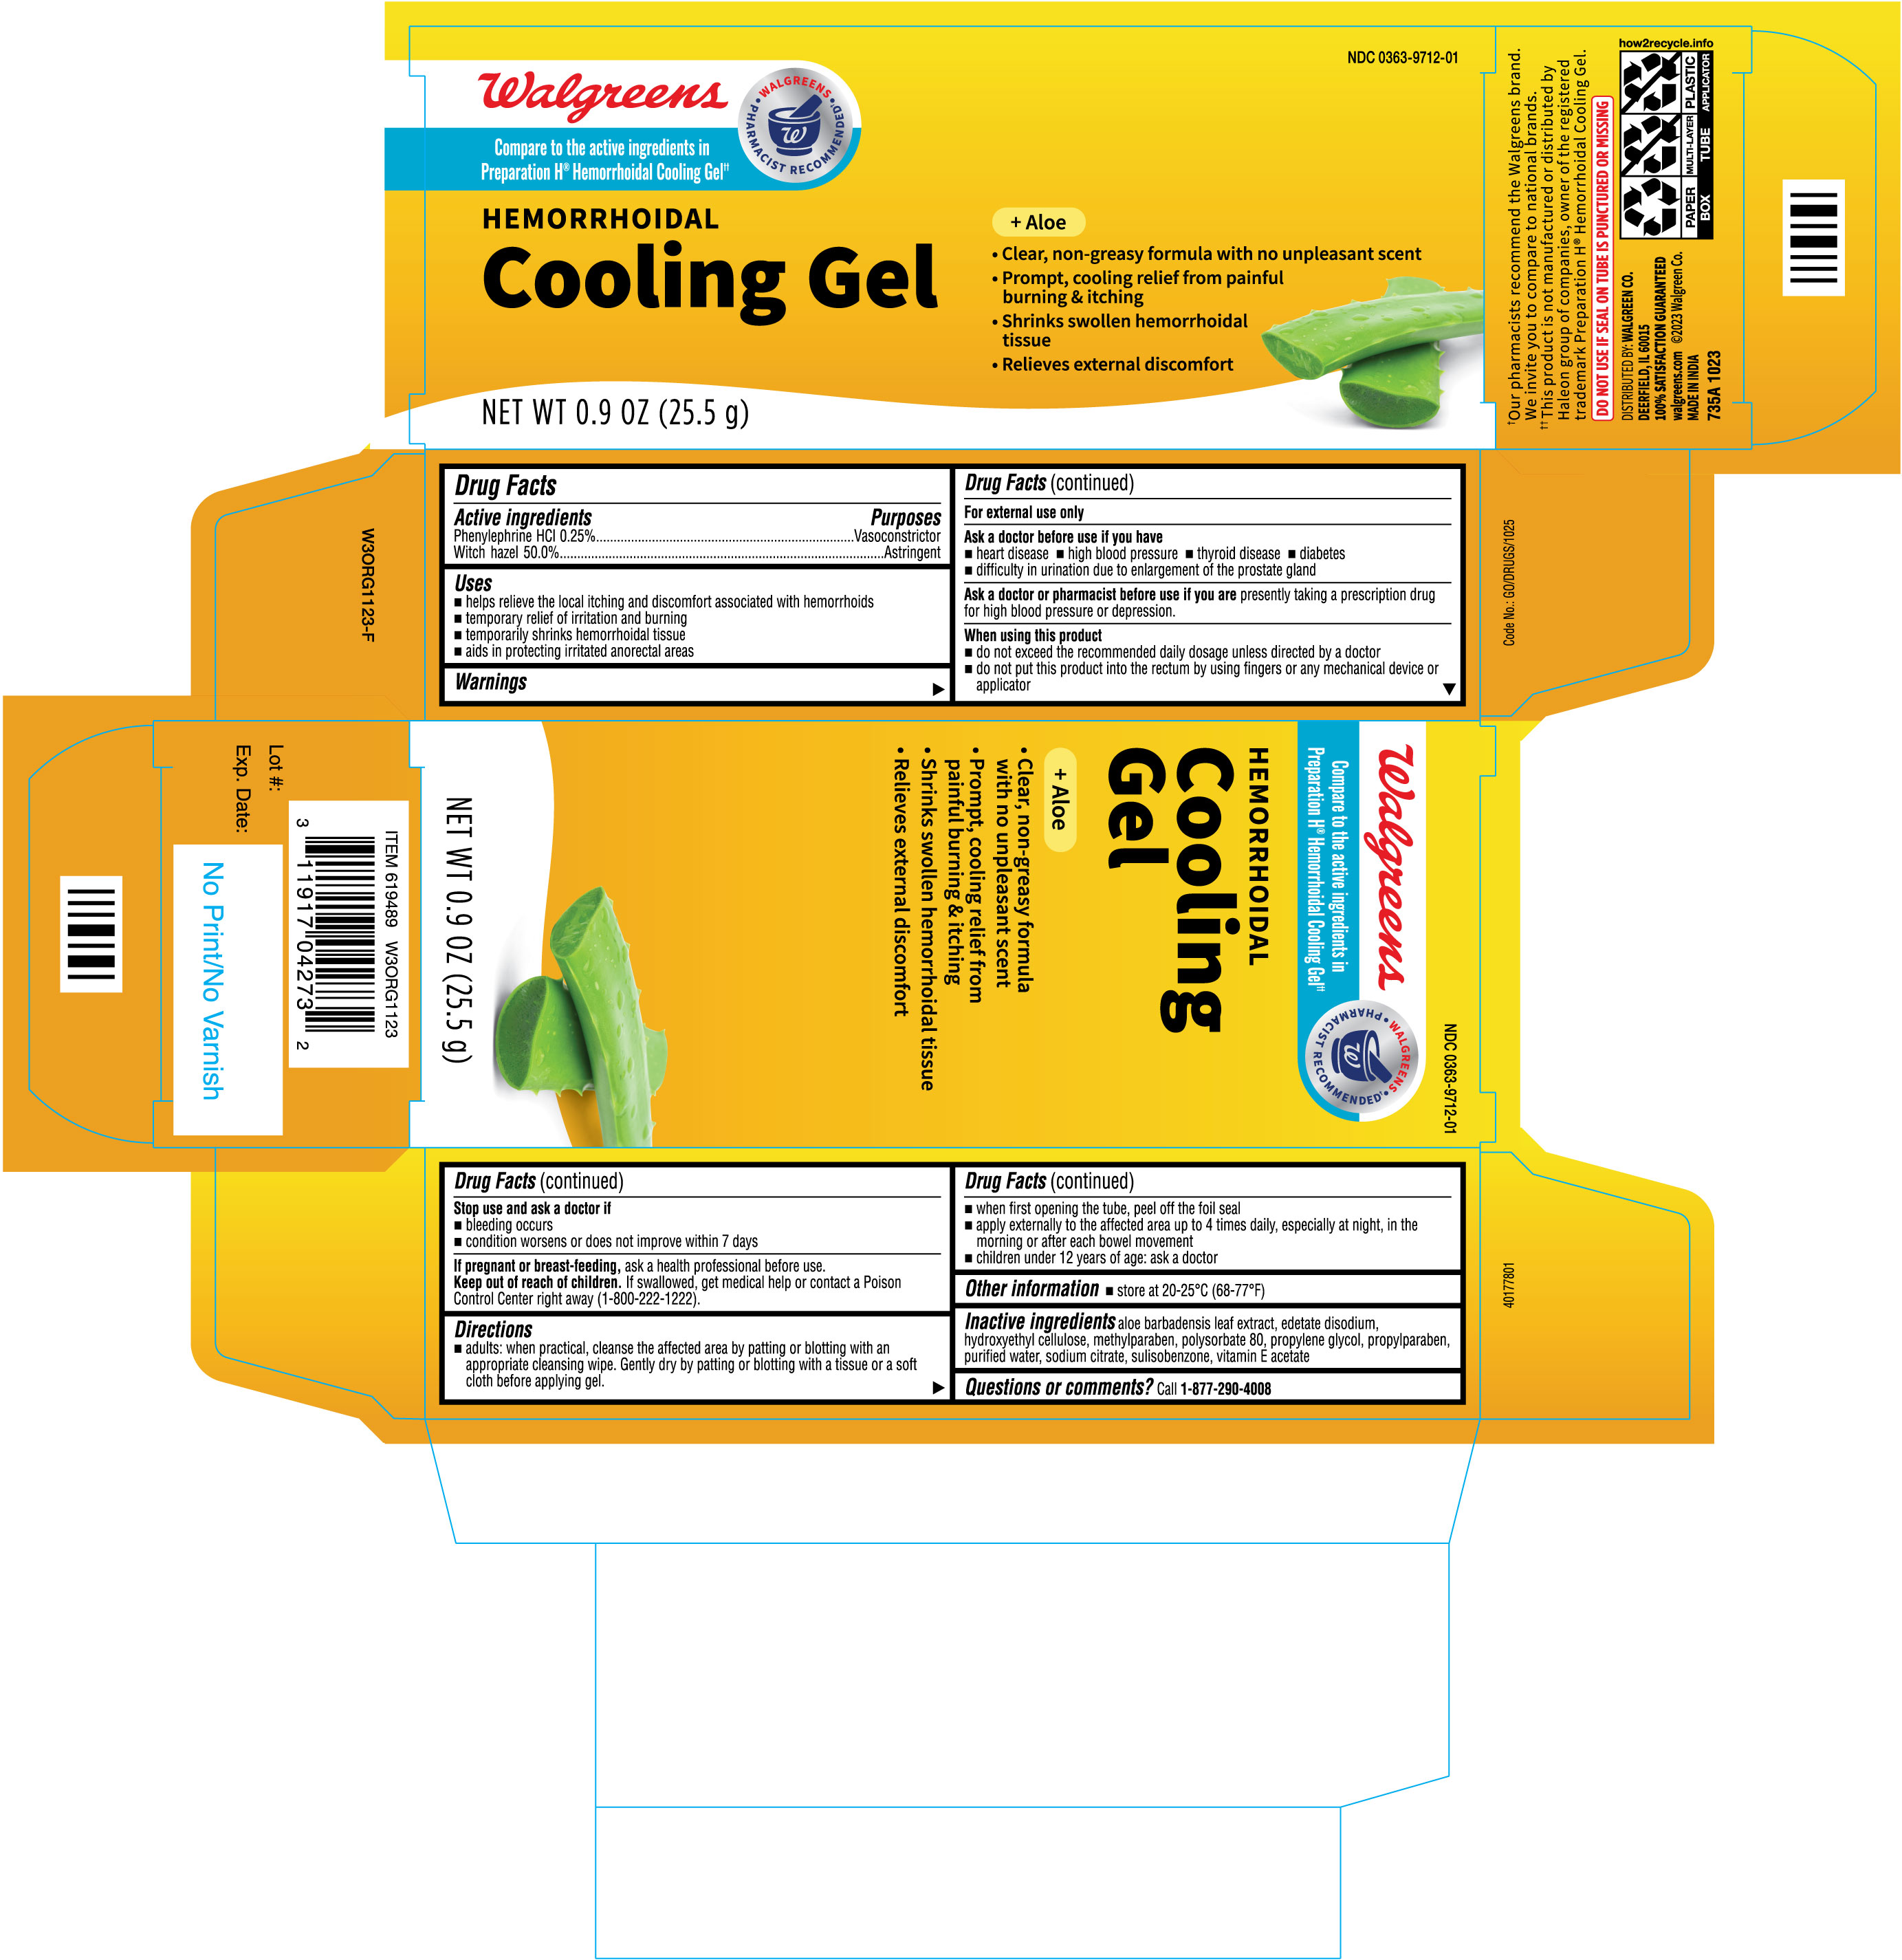 735A-Walgreens-Hemorrhoidal cooling gel-carton.jpg